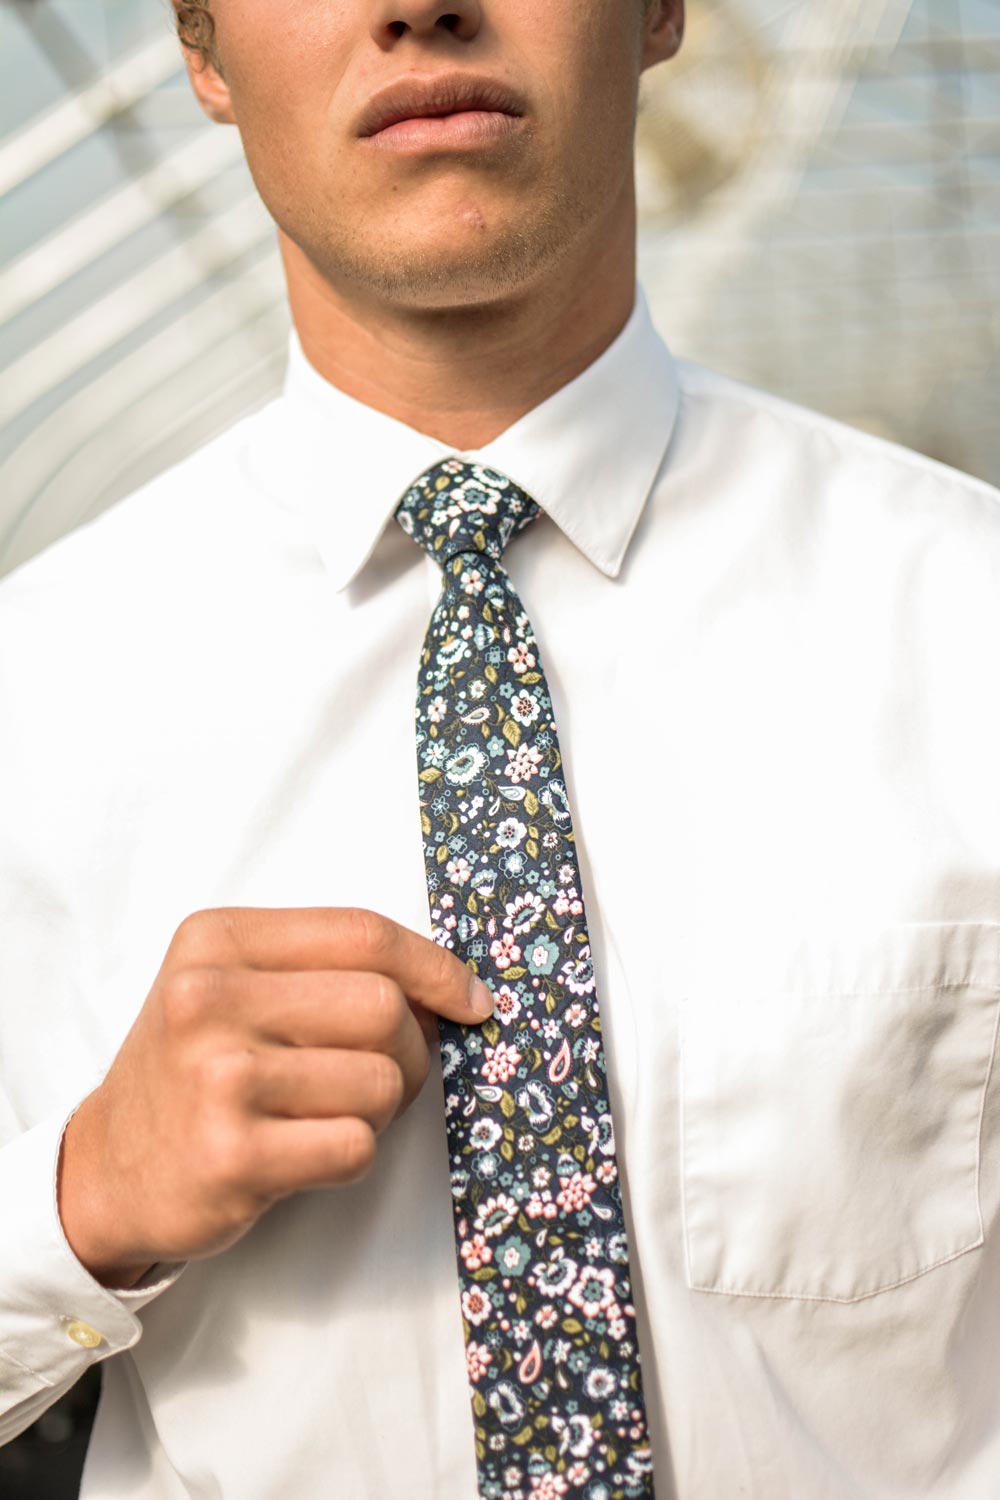 First Date tie worn with white shirt. 